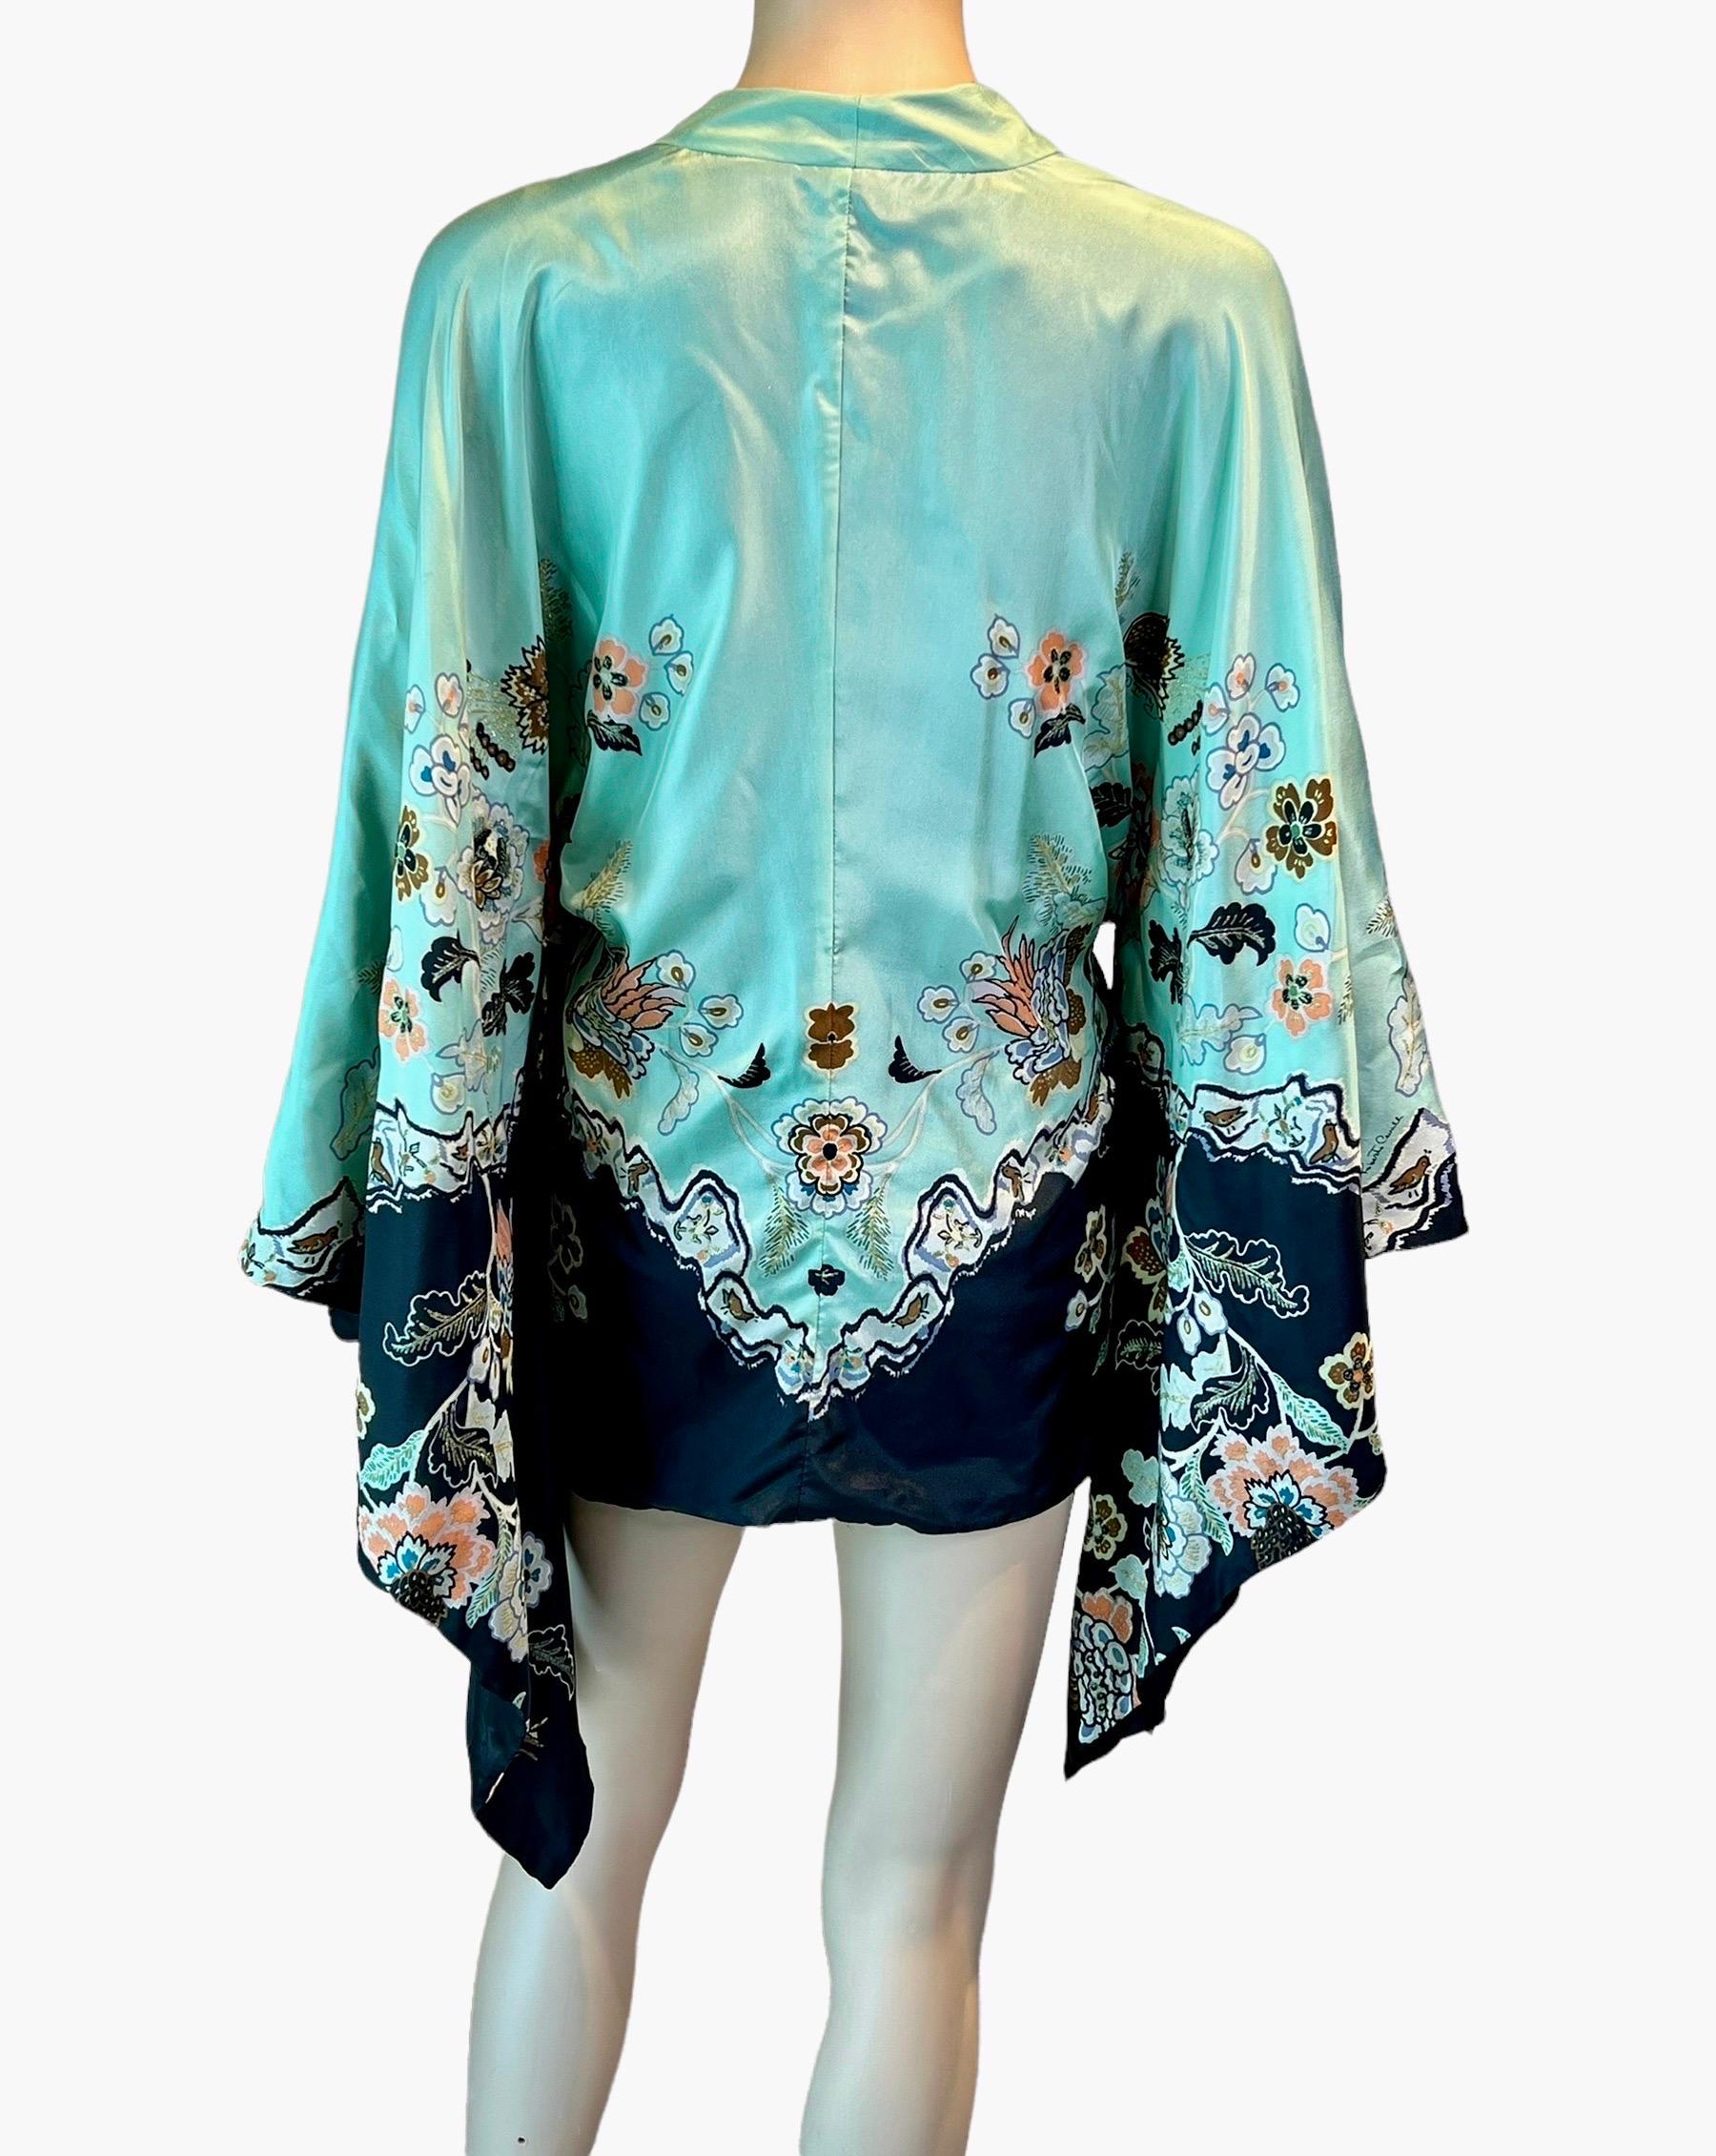 Roberto Cavalli S/S 2003 Runway Chinoiserie Print Silk Kimono Top For Sale 2